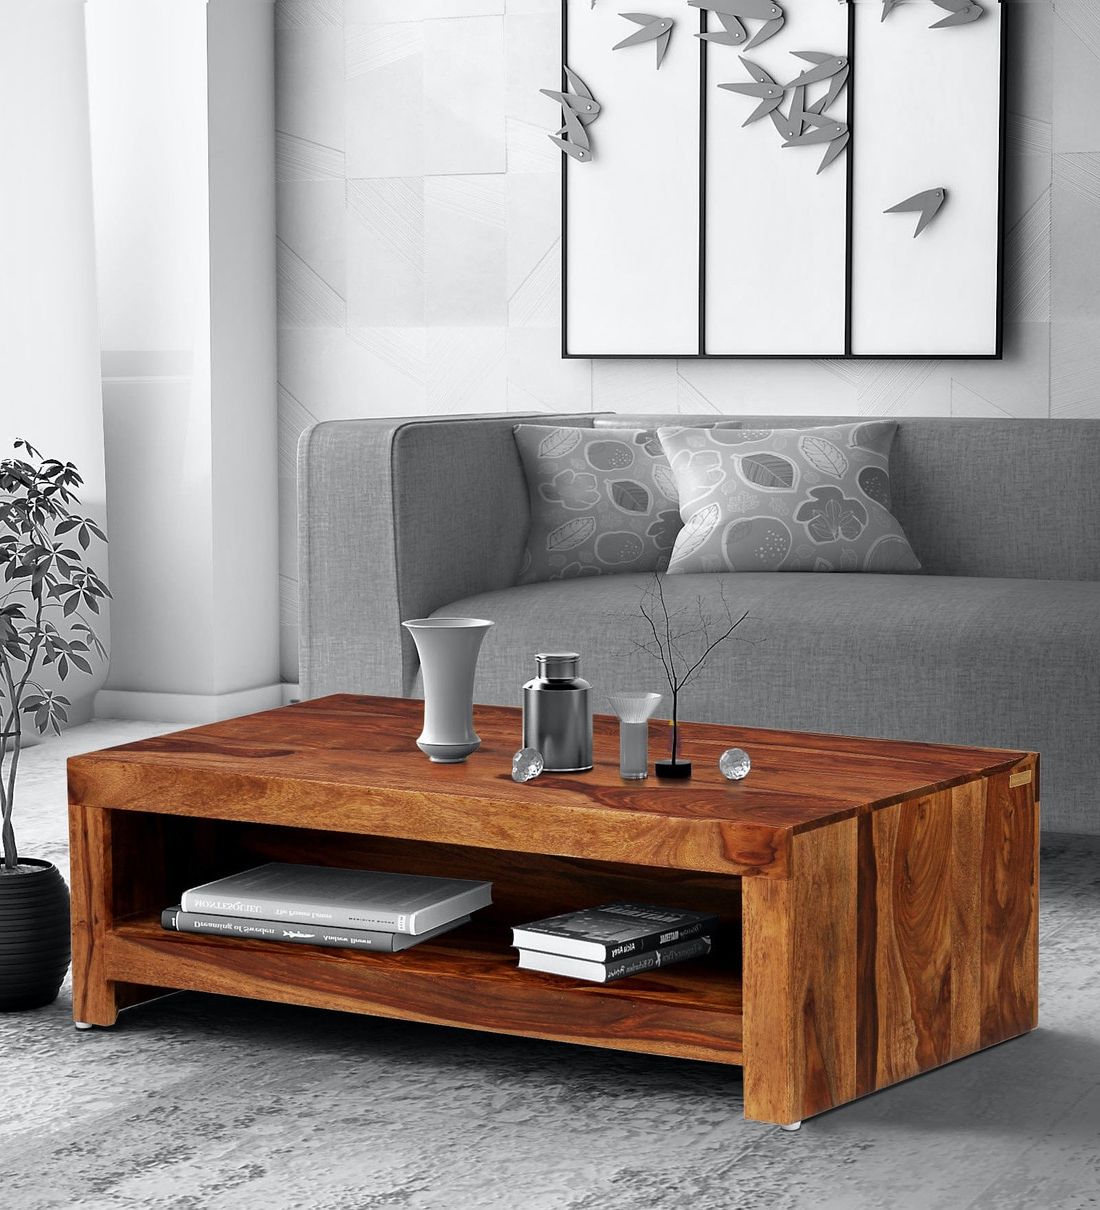 Buy Acropolis Solid Wood Coffee Table In Rustic Teak Finish Within Rustic Wood Coffee Tables (View 8 of 20)